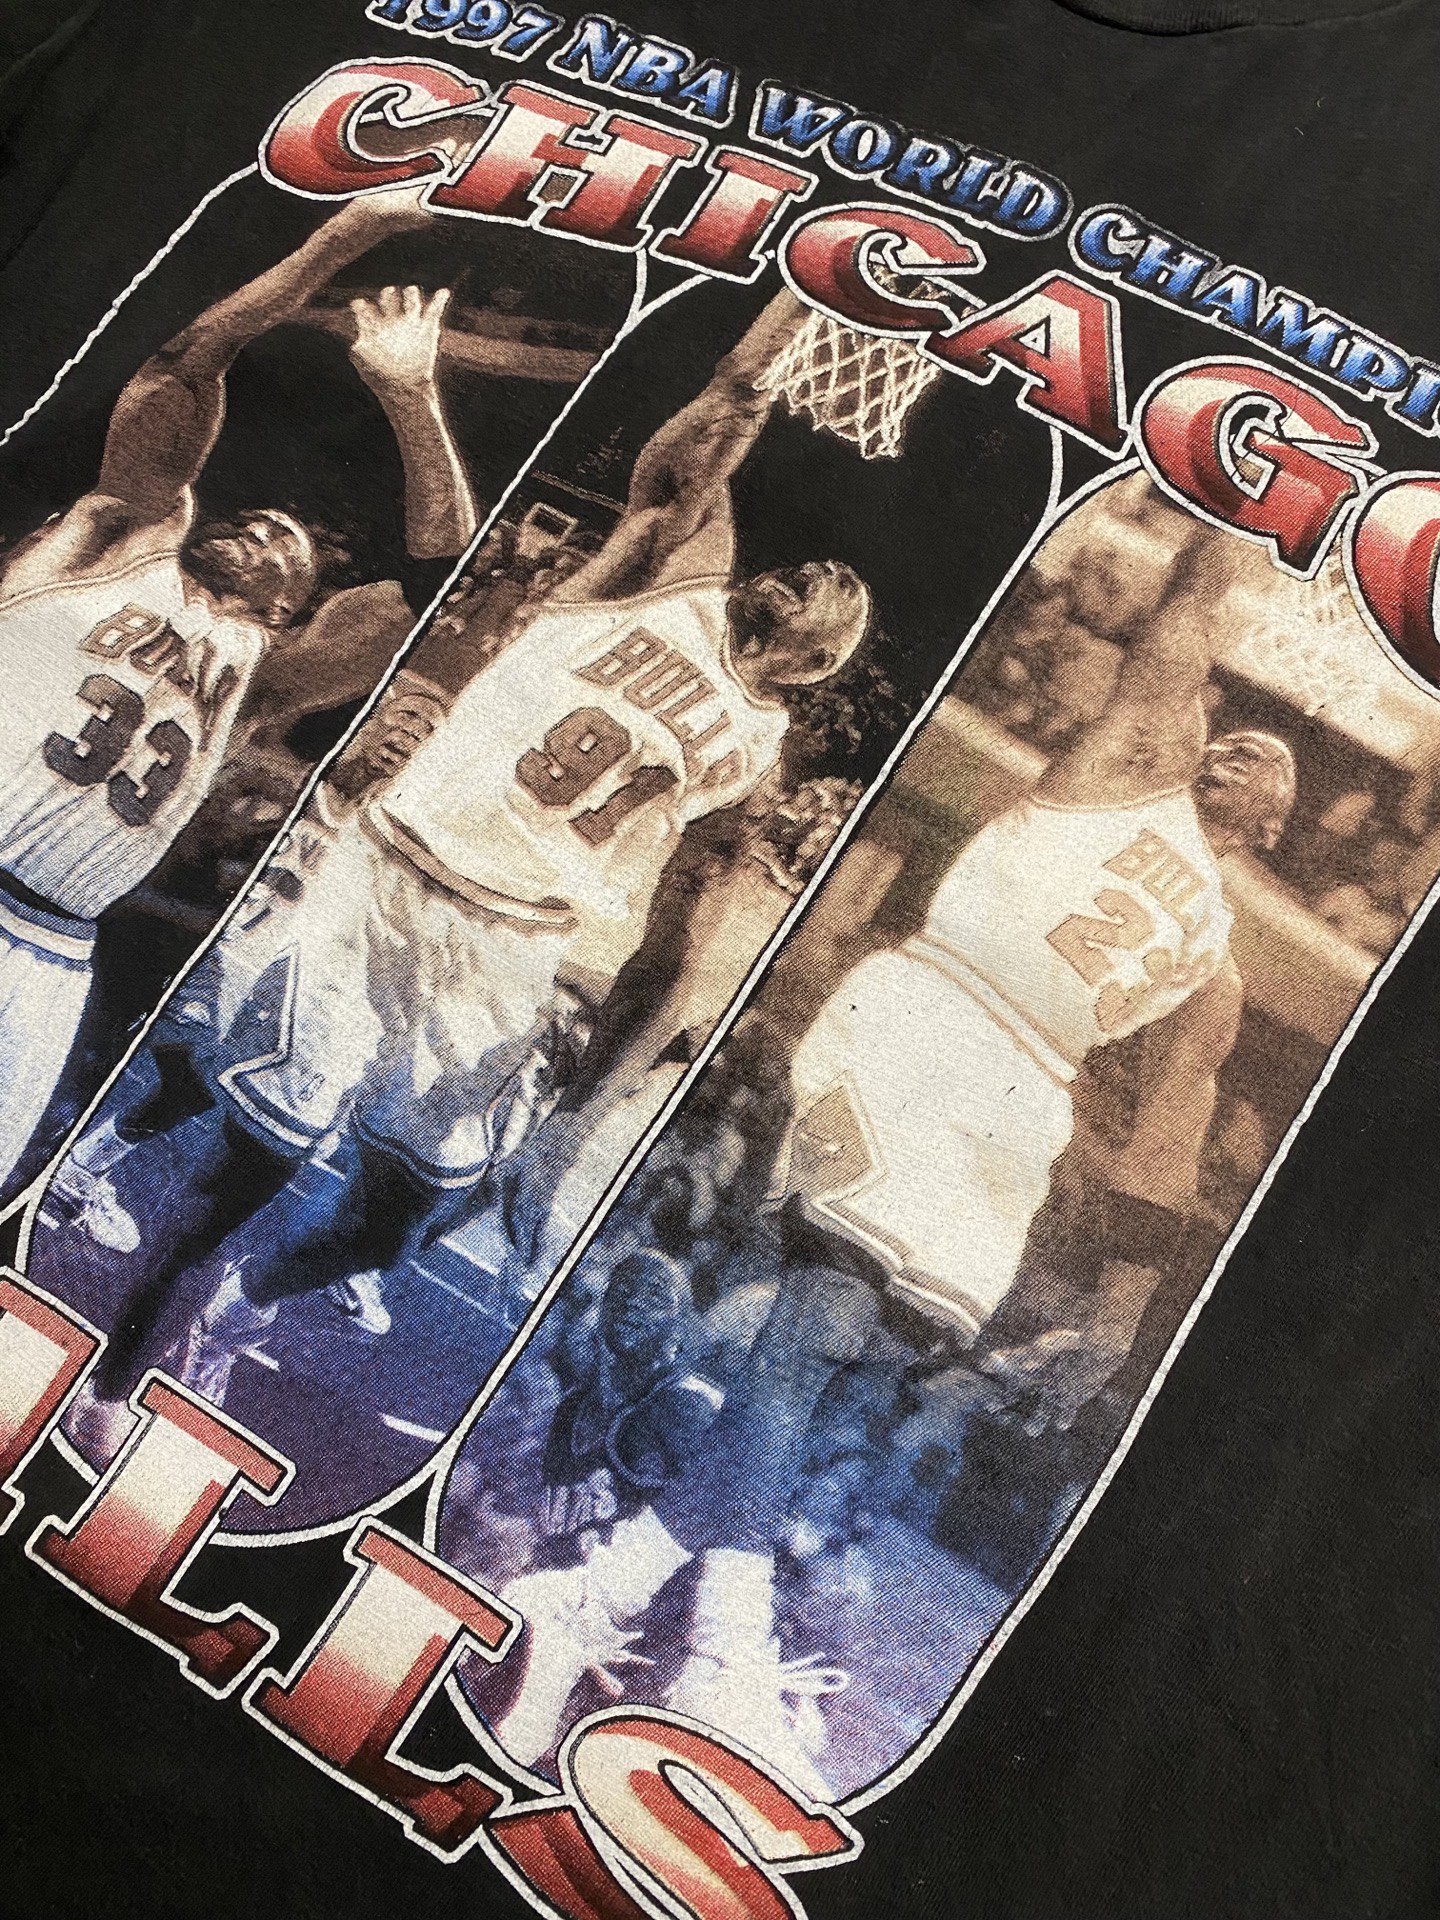 Vintage Chicago Bulls 3 Peat Champions Bootleg 90's T-Shirt